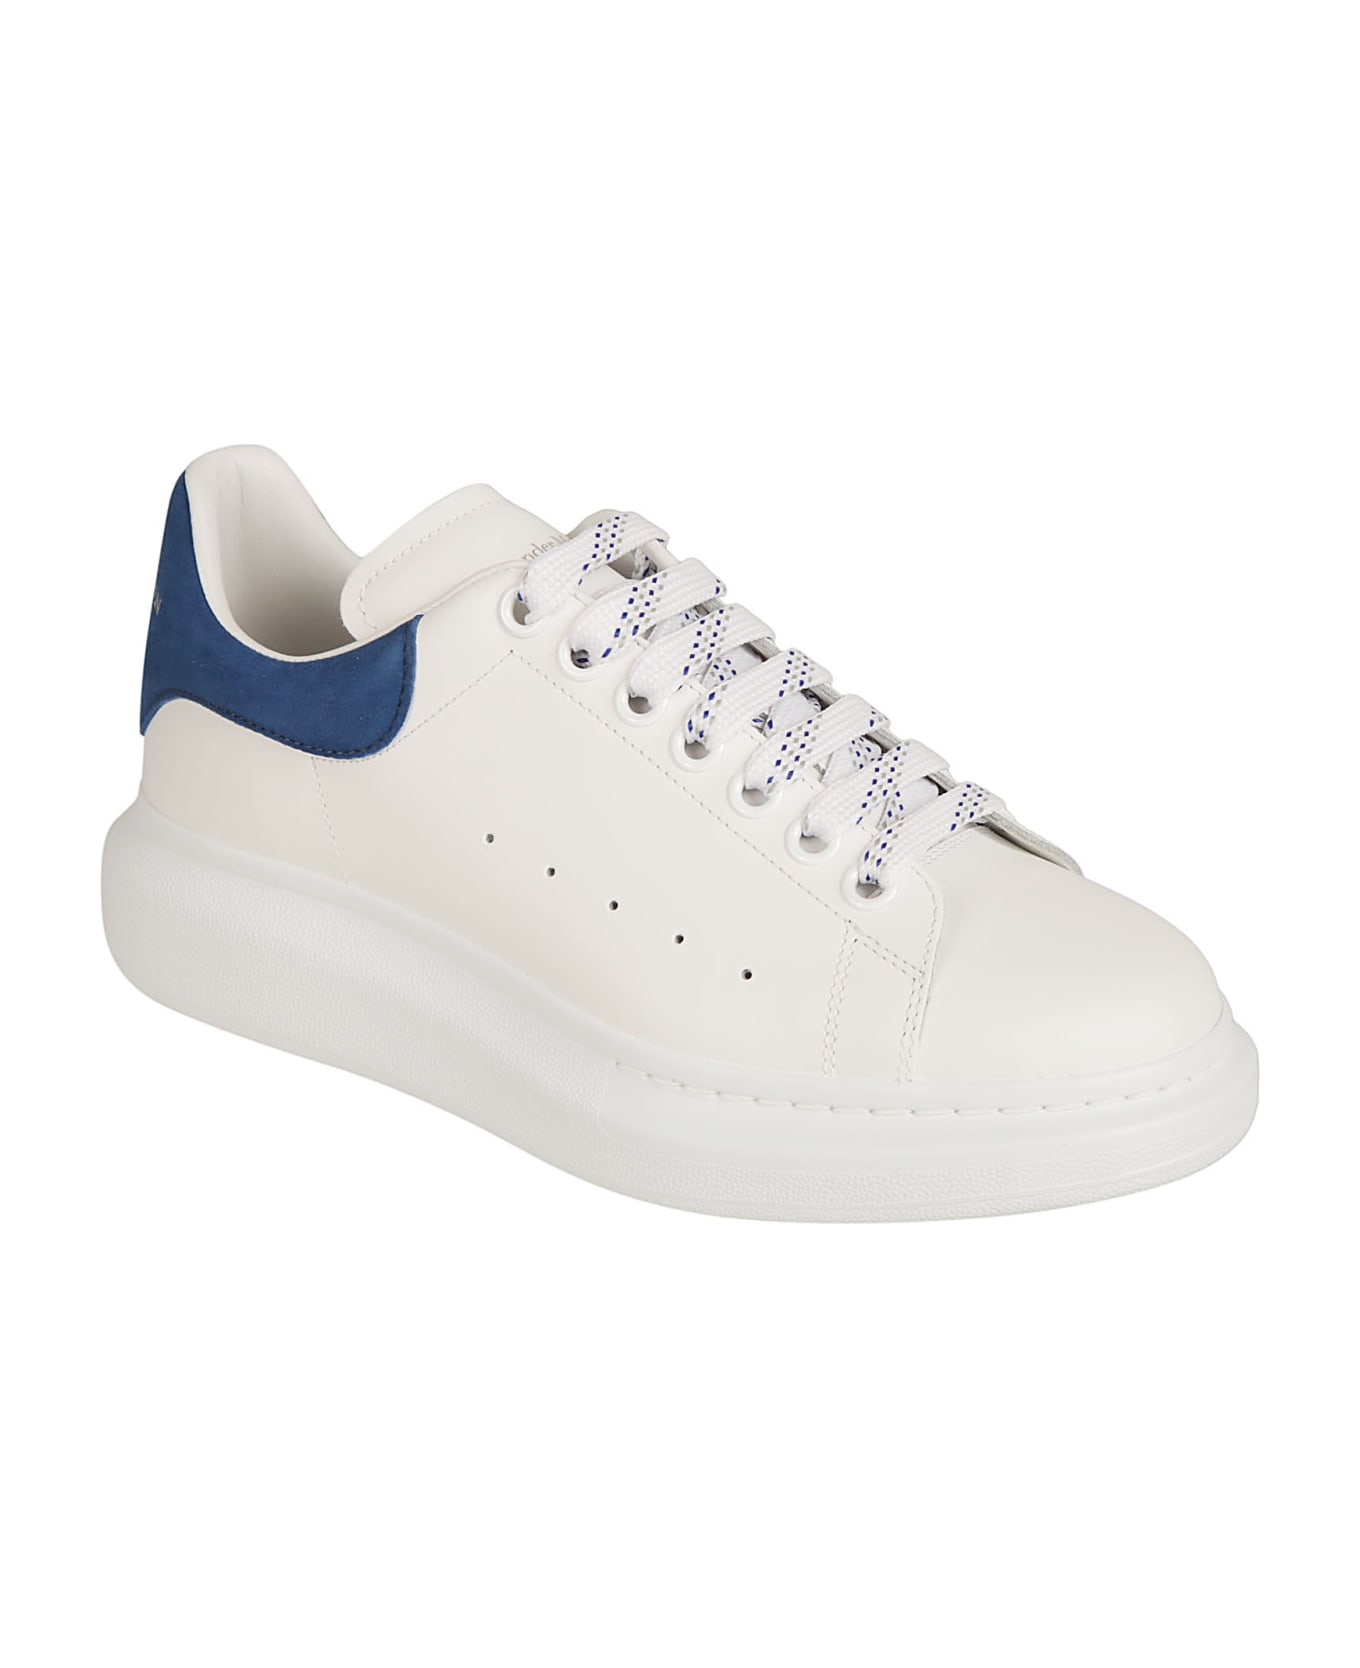 Alexander McQueen Larry Sneakers - White/Paris Blue